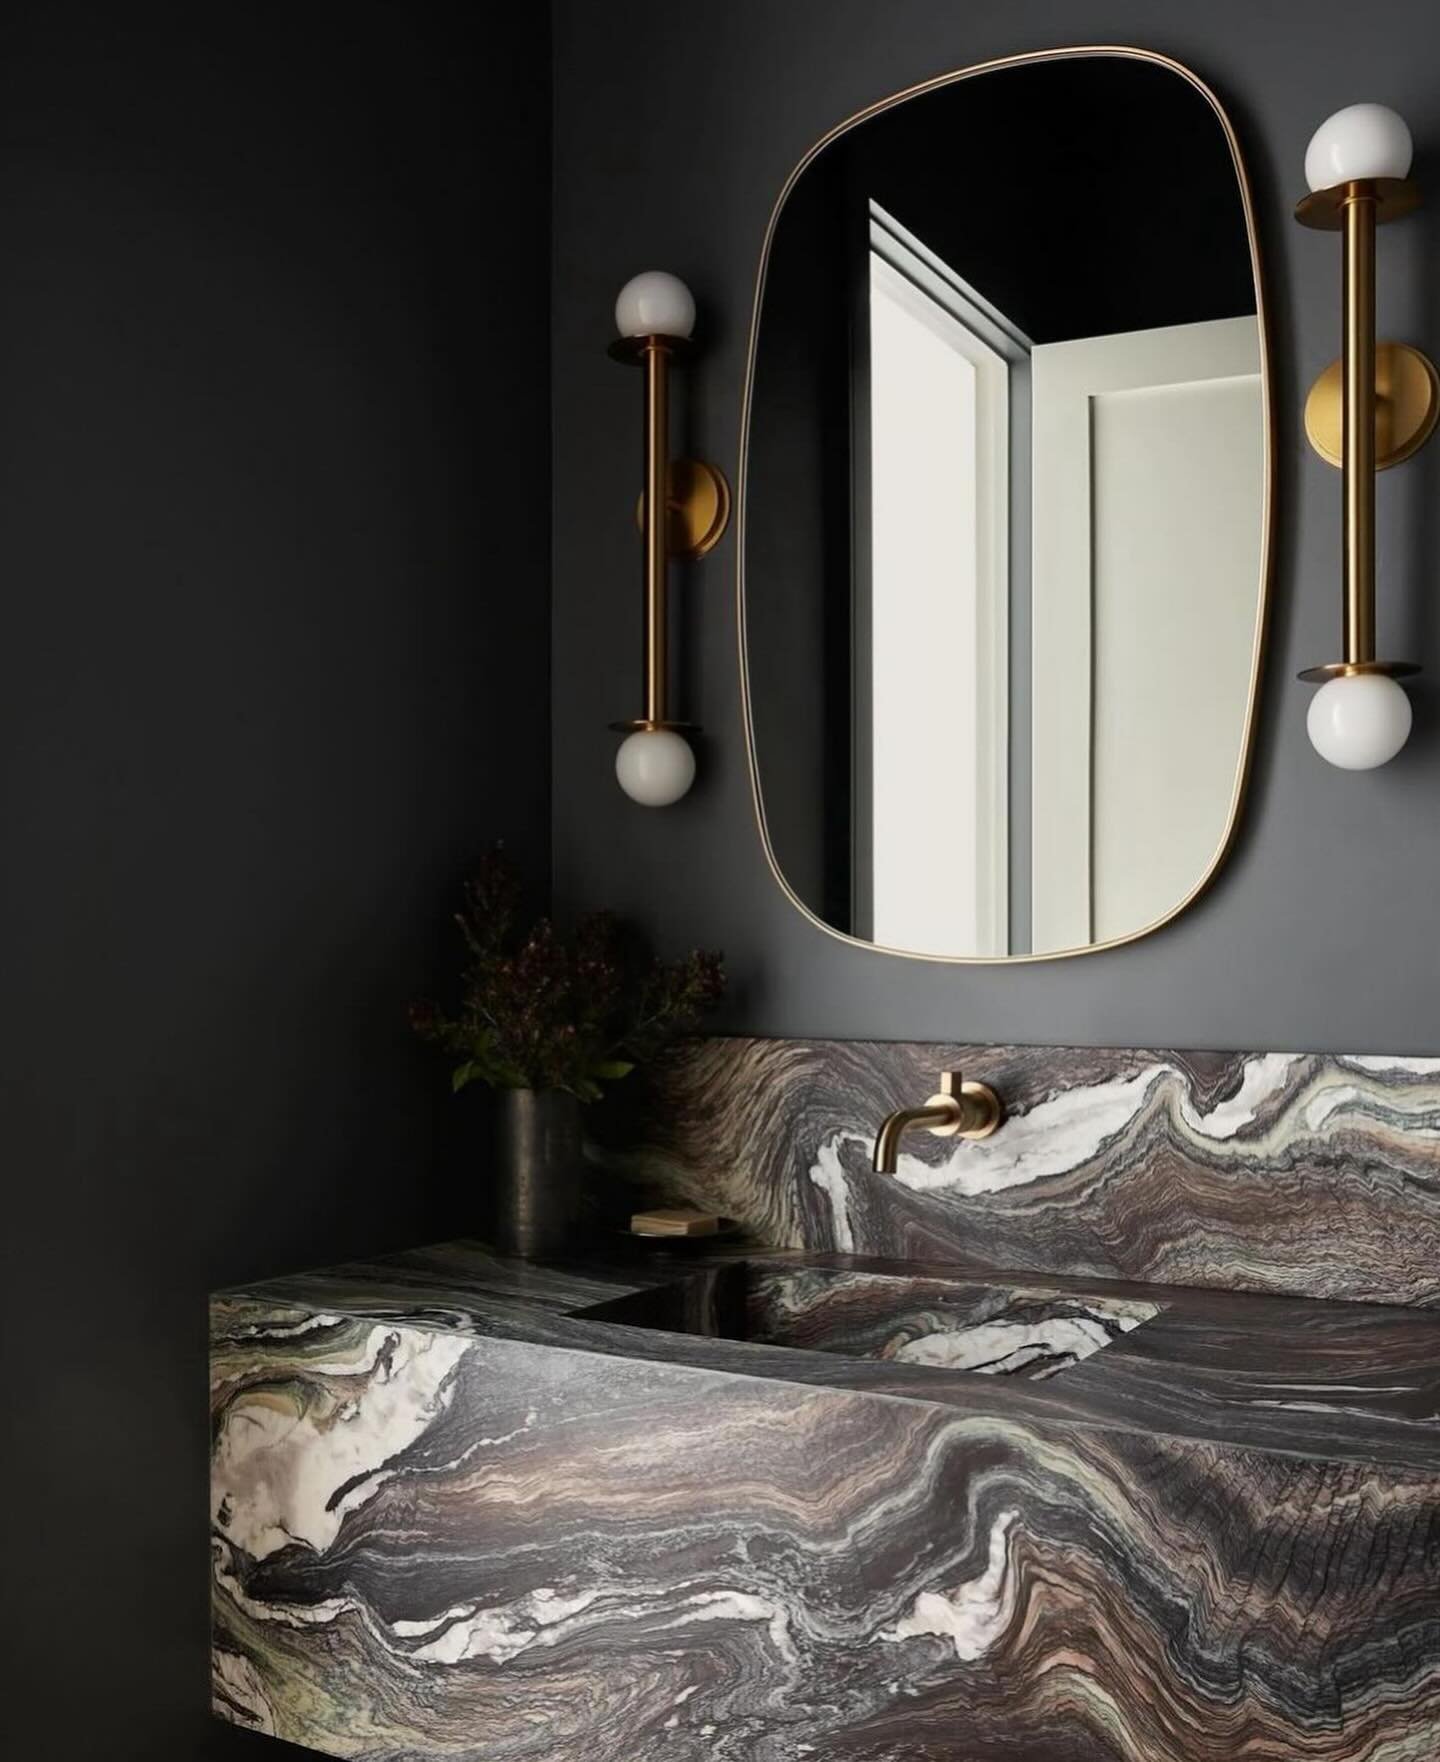 Nothing beats real stone!!

🖤

#interiordesign #interiordesigner #architecture #architect #bathroomdesign #powderroomdesign #marble #marblesink #integratedsink #luxury #luxuryhomes